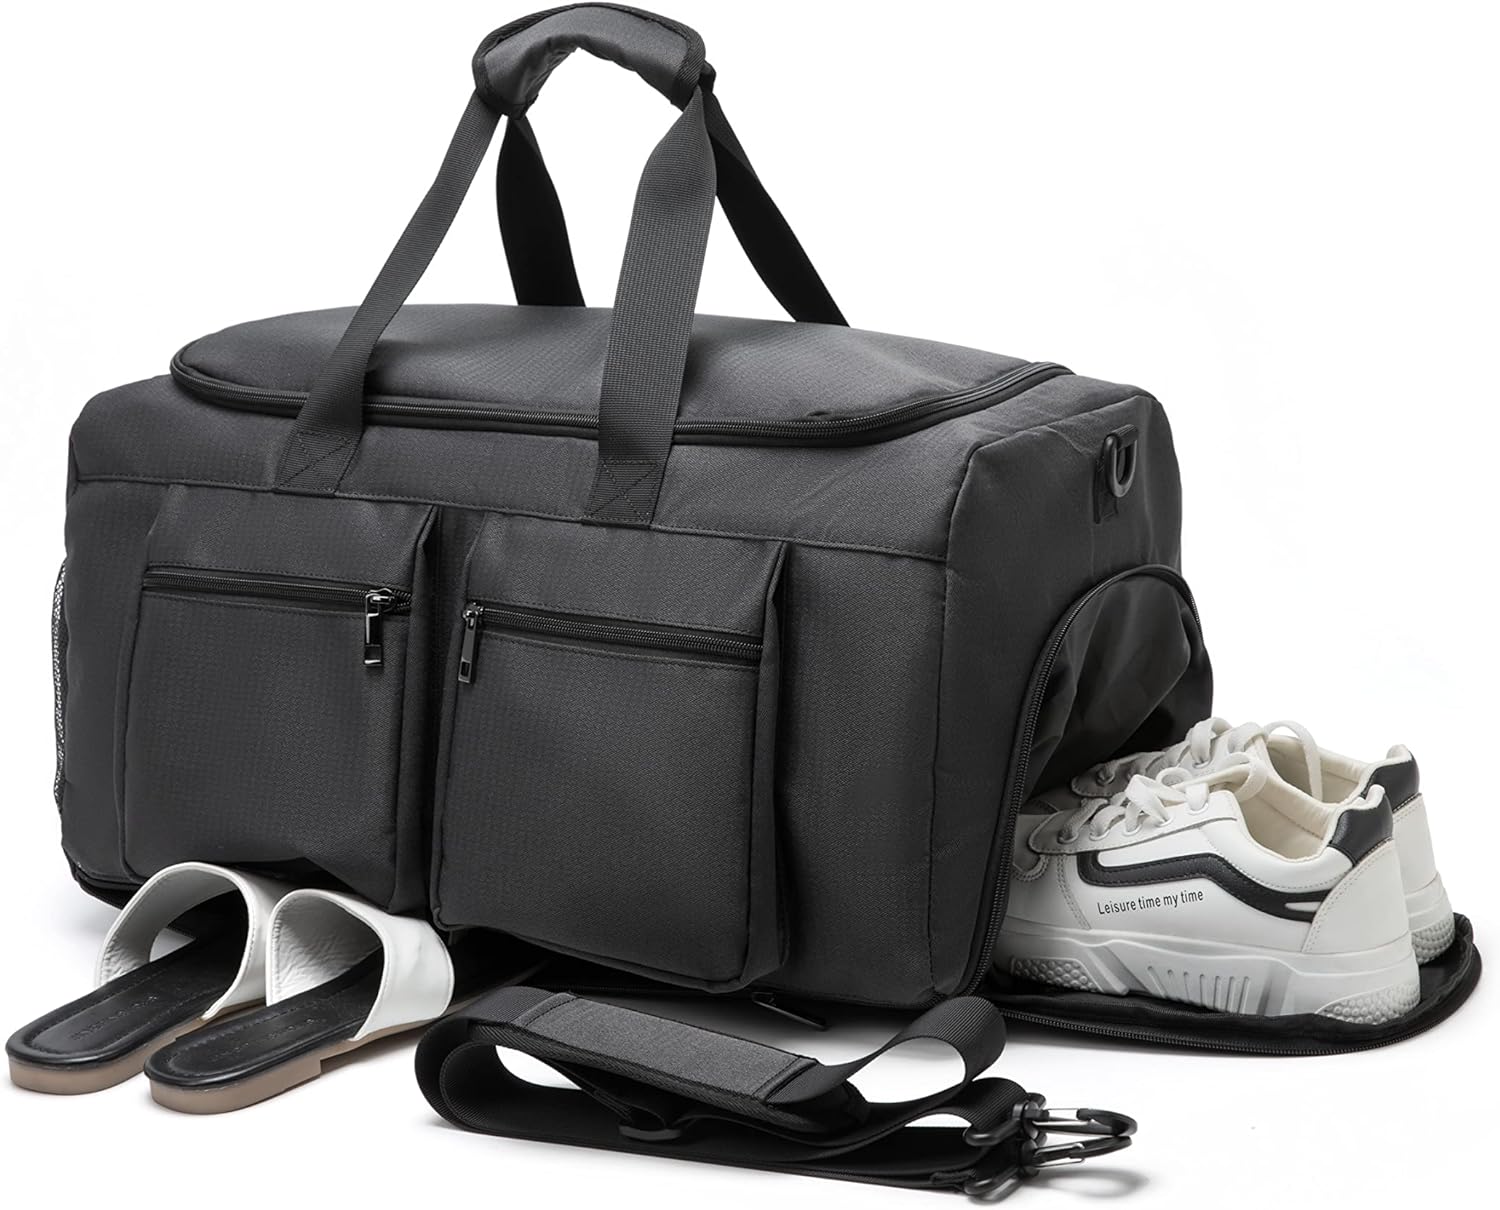 FR Fashion Co. 21" Men's Overnight Travel Duffel Bag